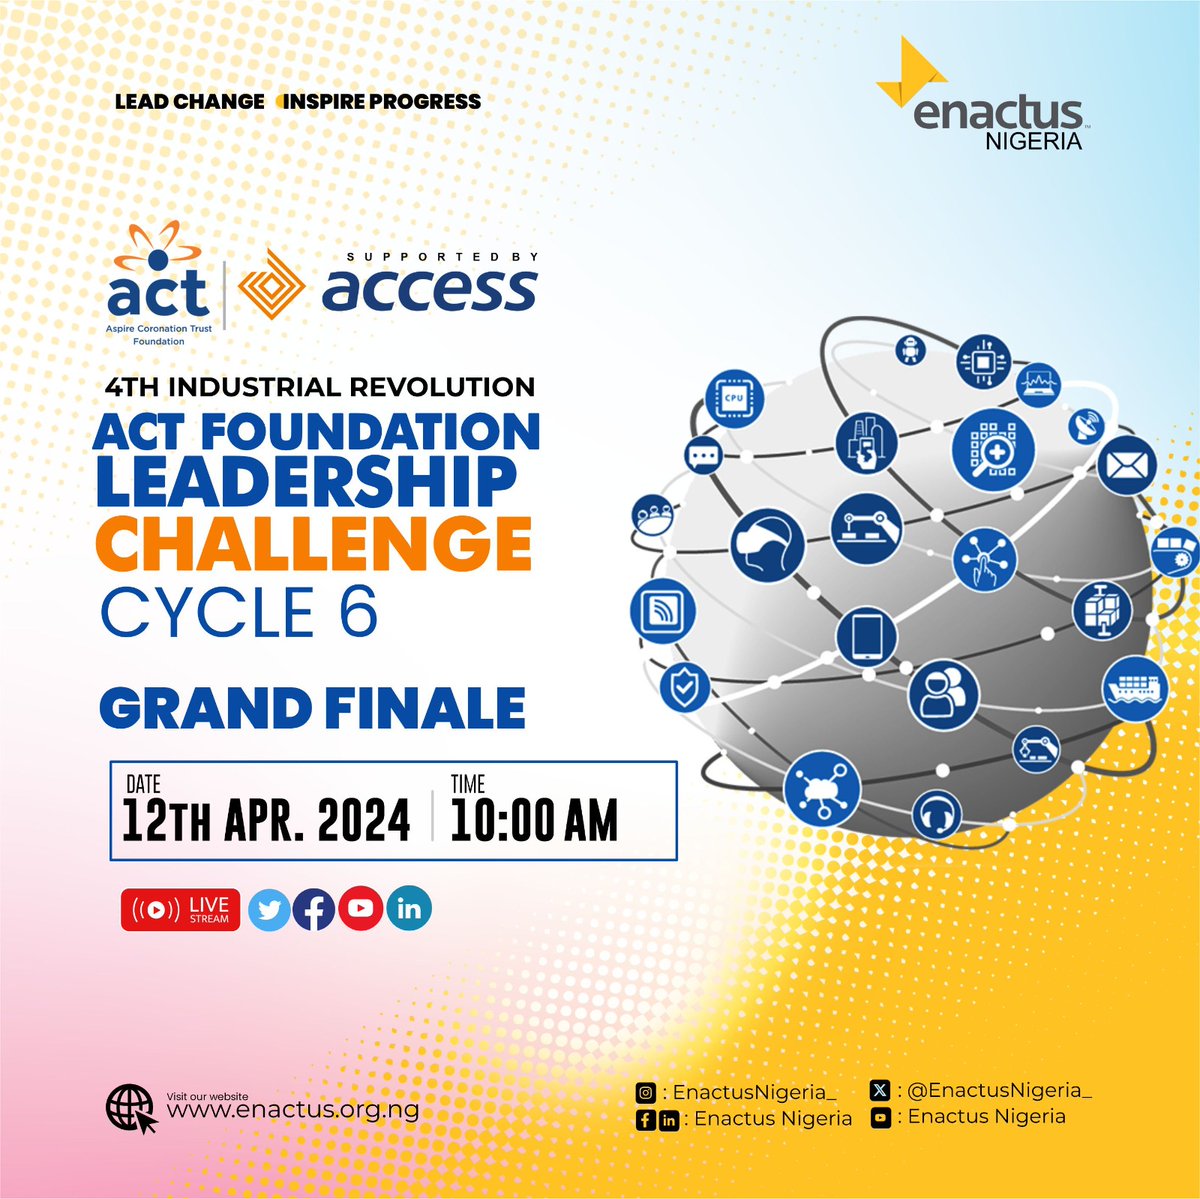 Super excited for the ACT Foundation Leadership Challenge grand finale tomorrow! @enactus_abu @EnactusNigeria_ 
#Changinglives #EnactusABU